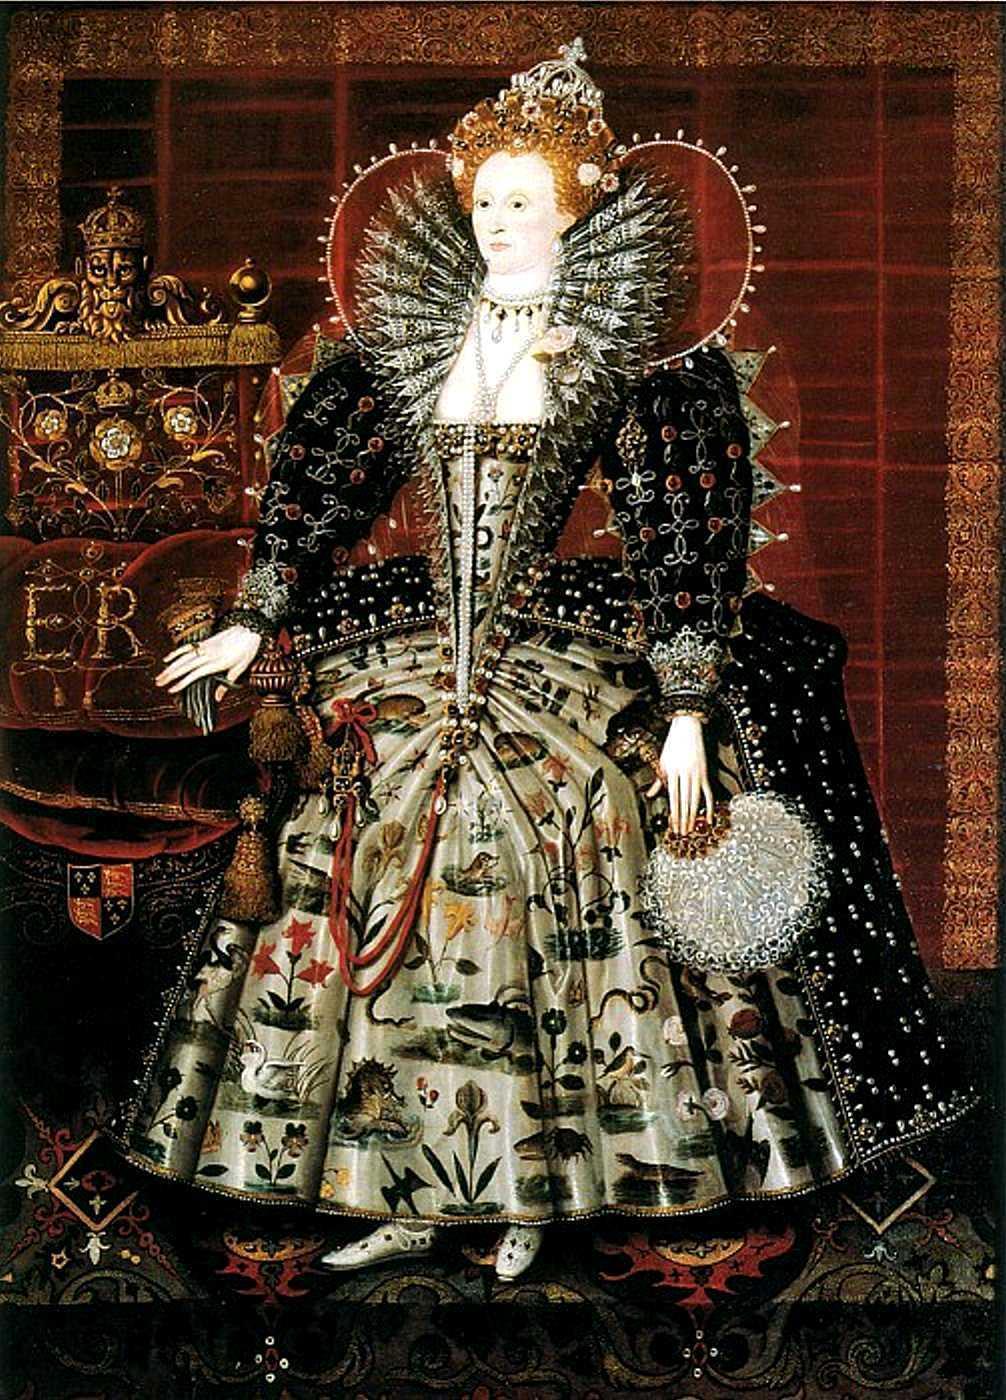 Elizabeth I (Last Tudor queen) died in